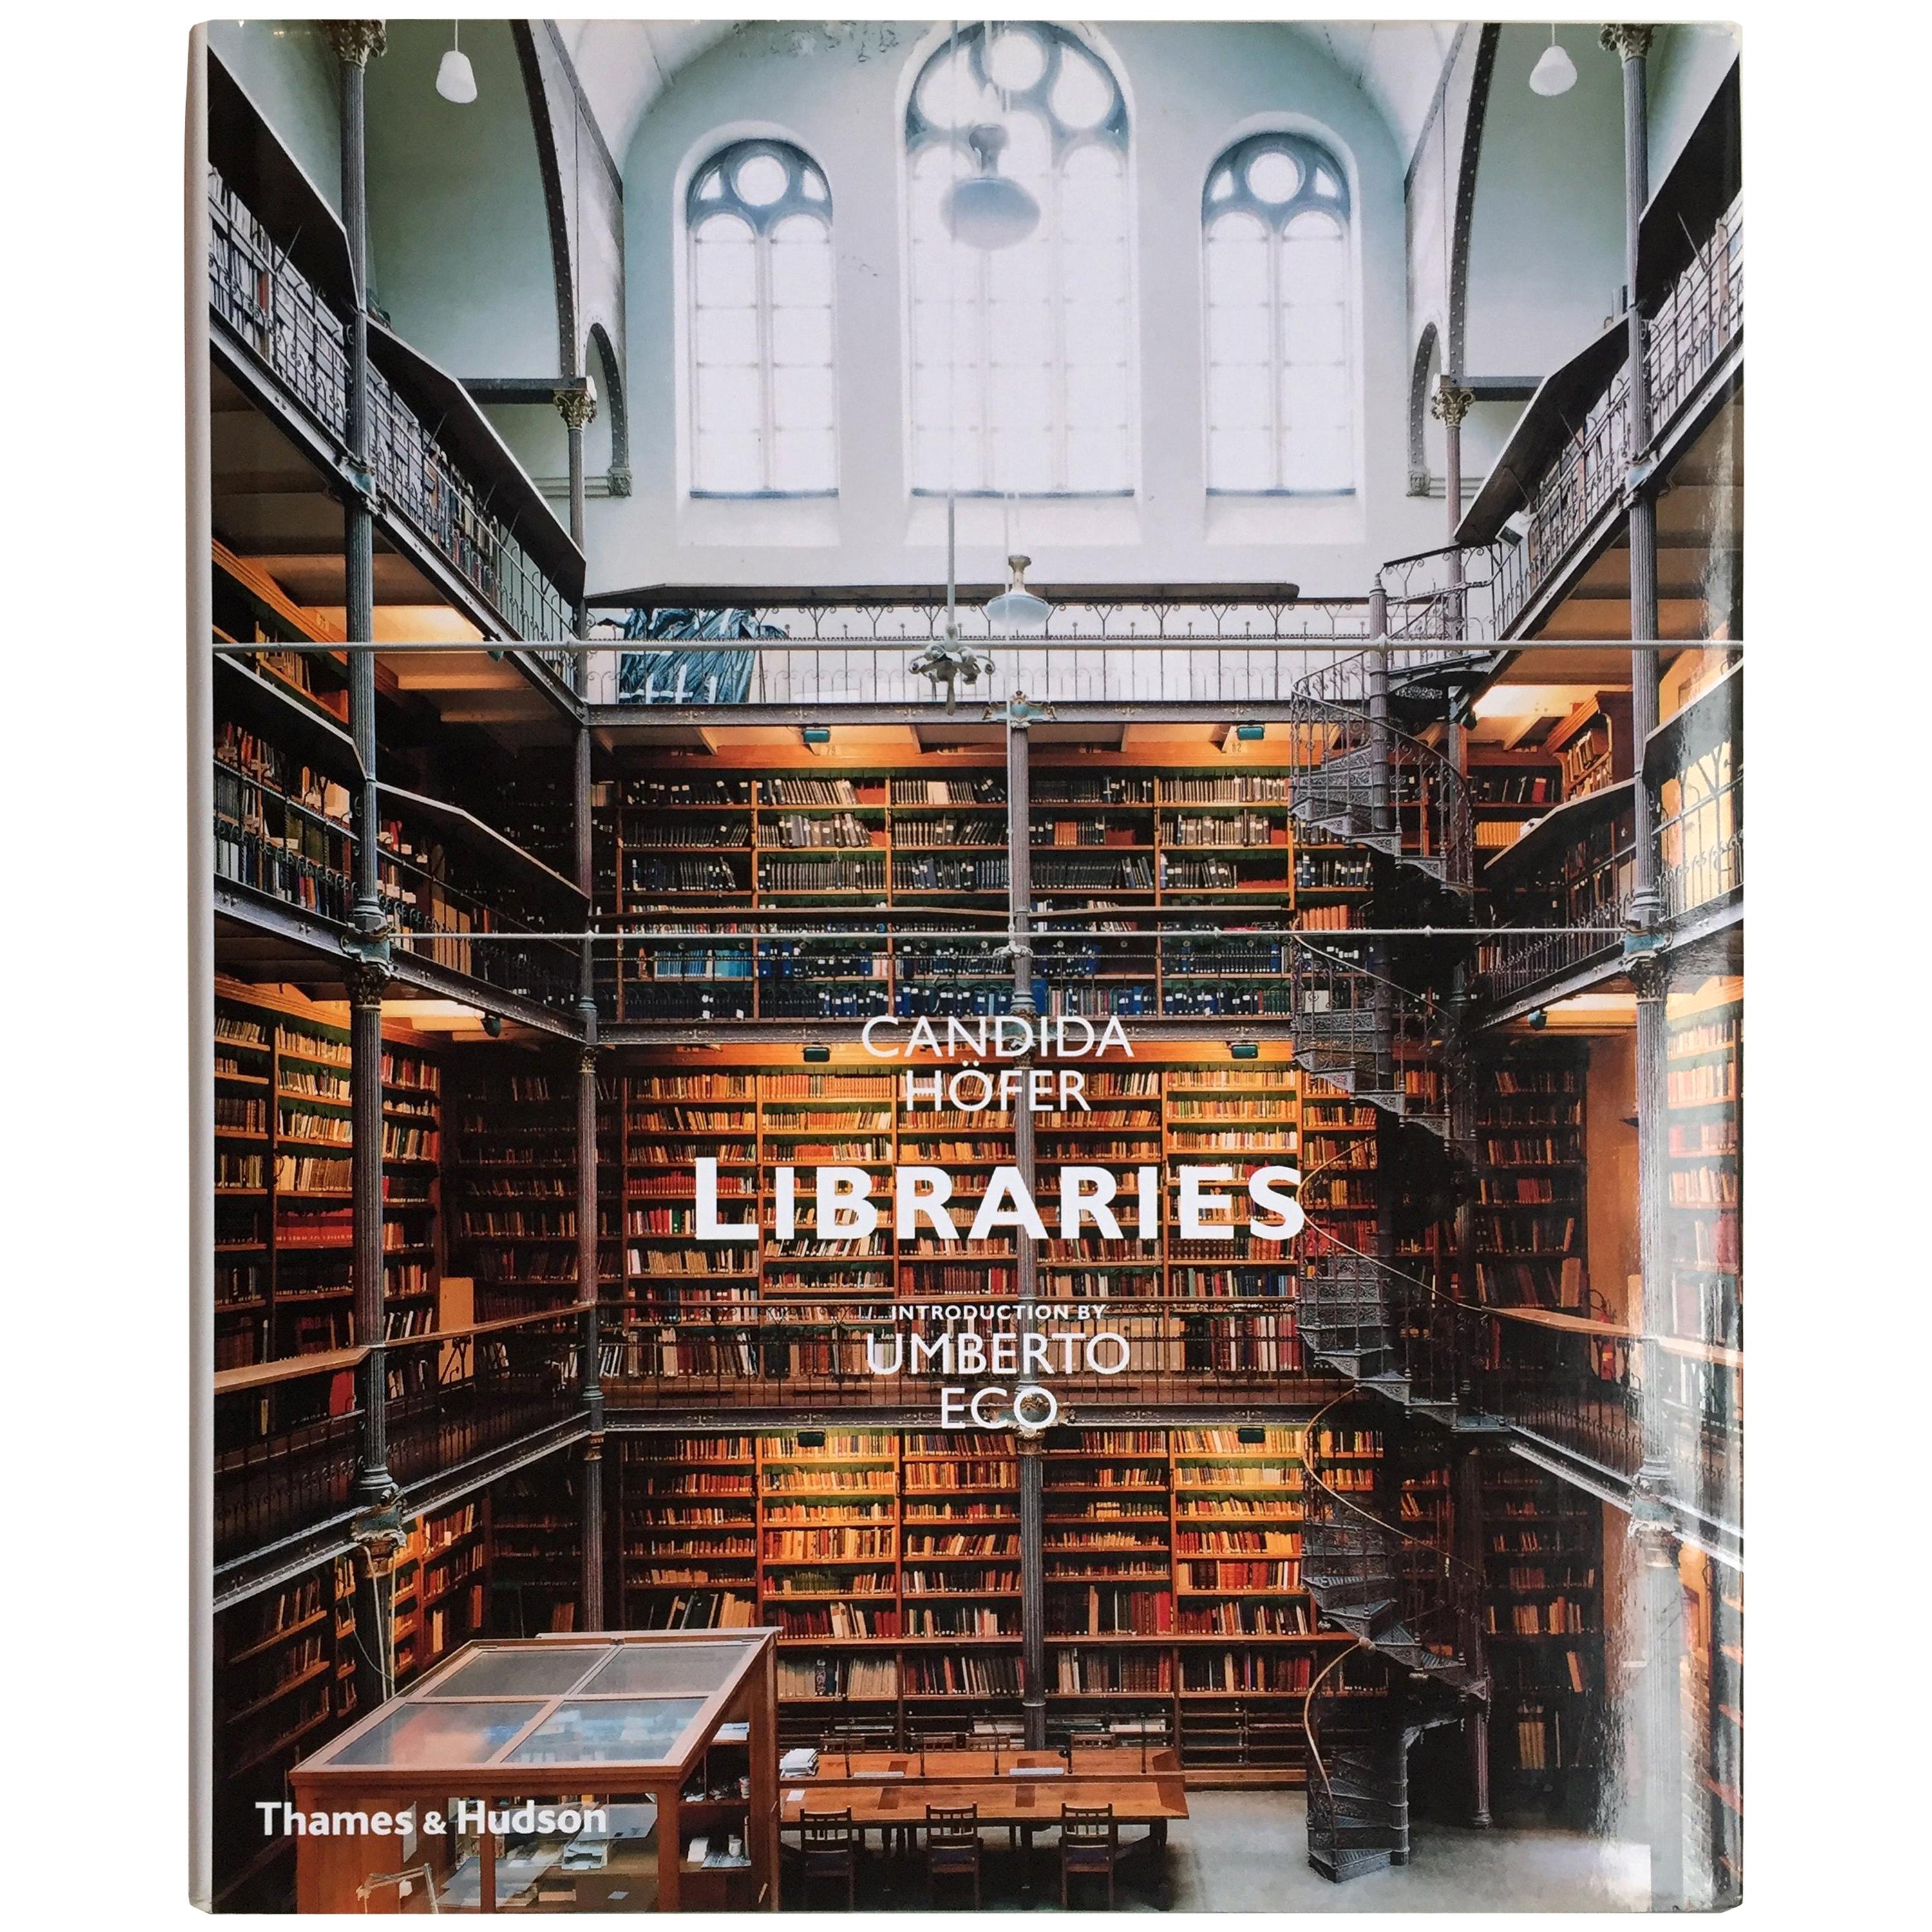 Libraries - Candida Höfer and Umberto Eco - Thames & Hudson, 2006